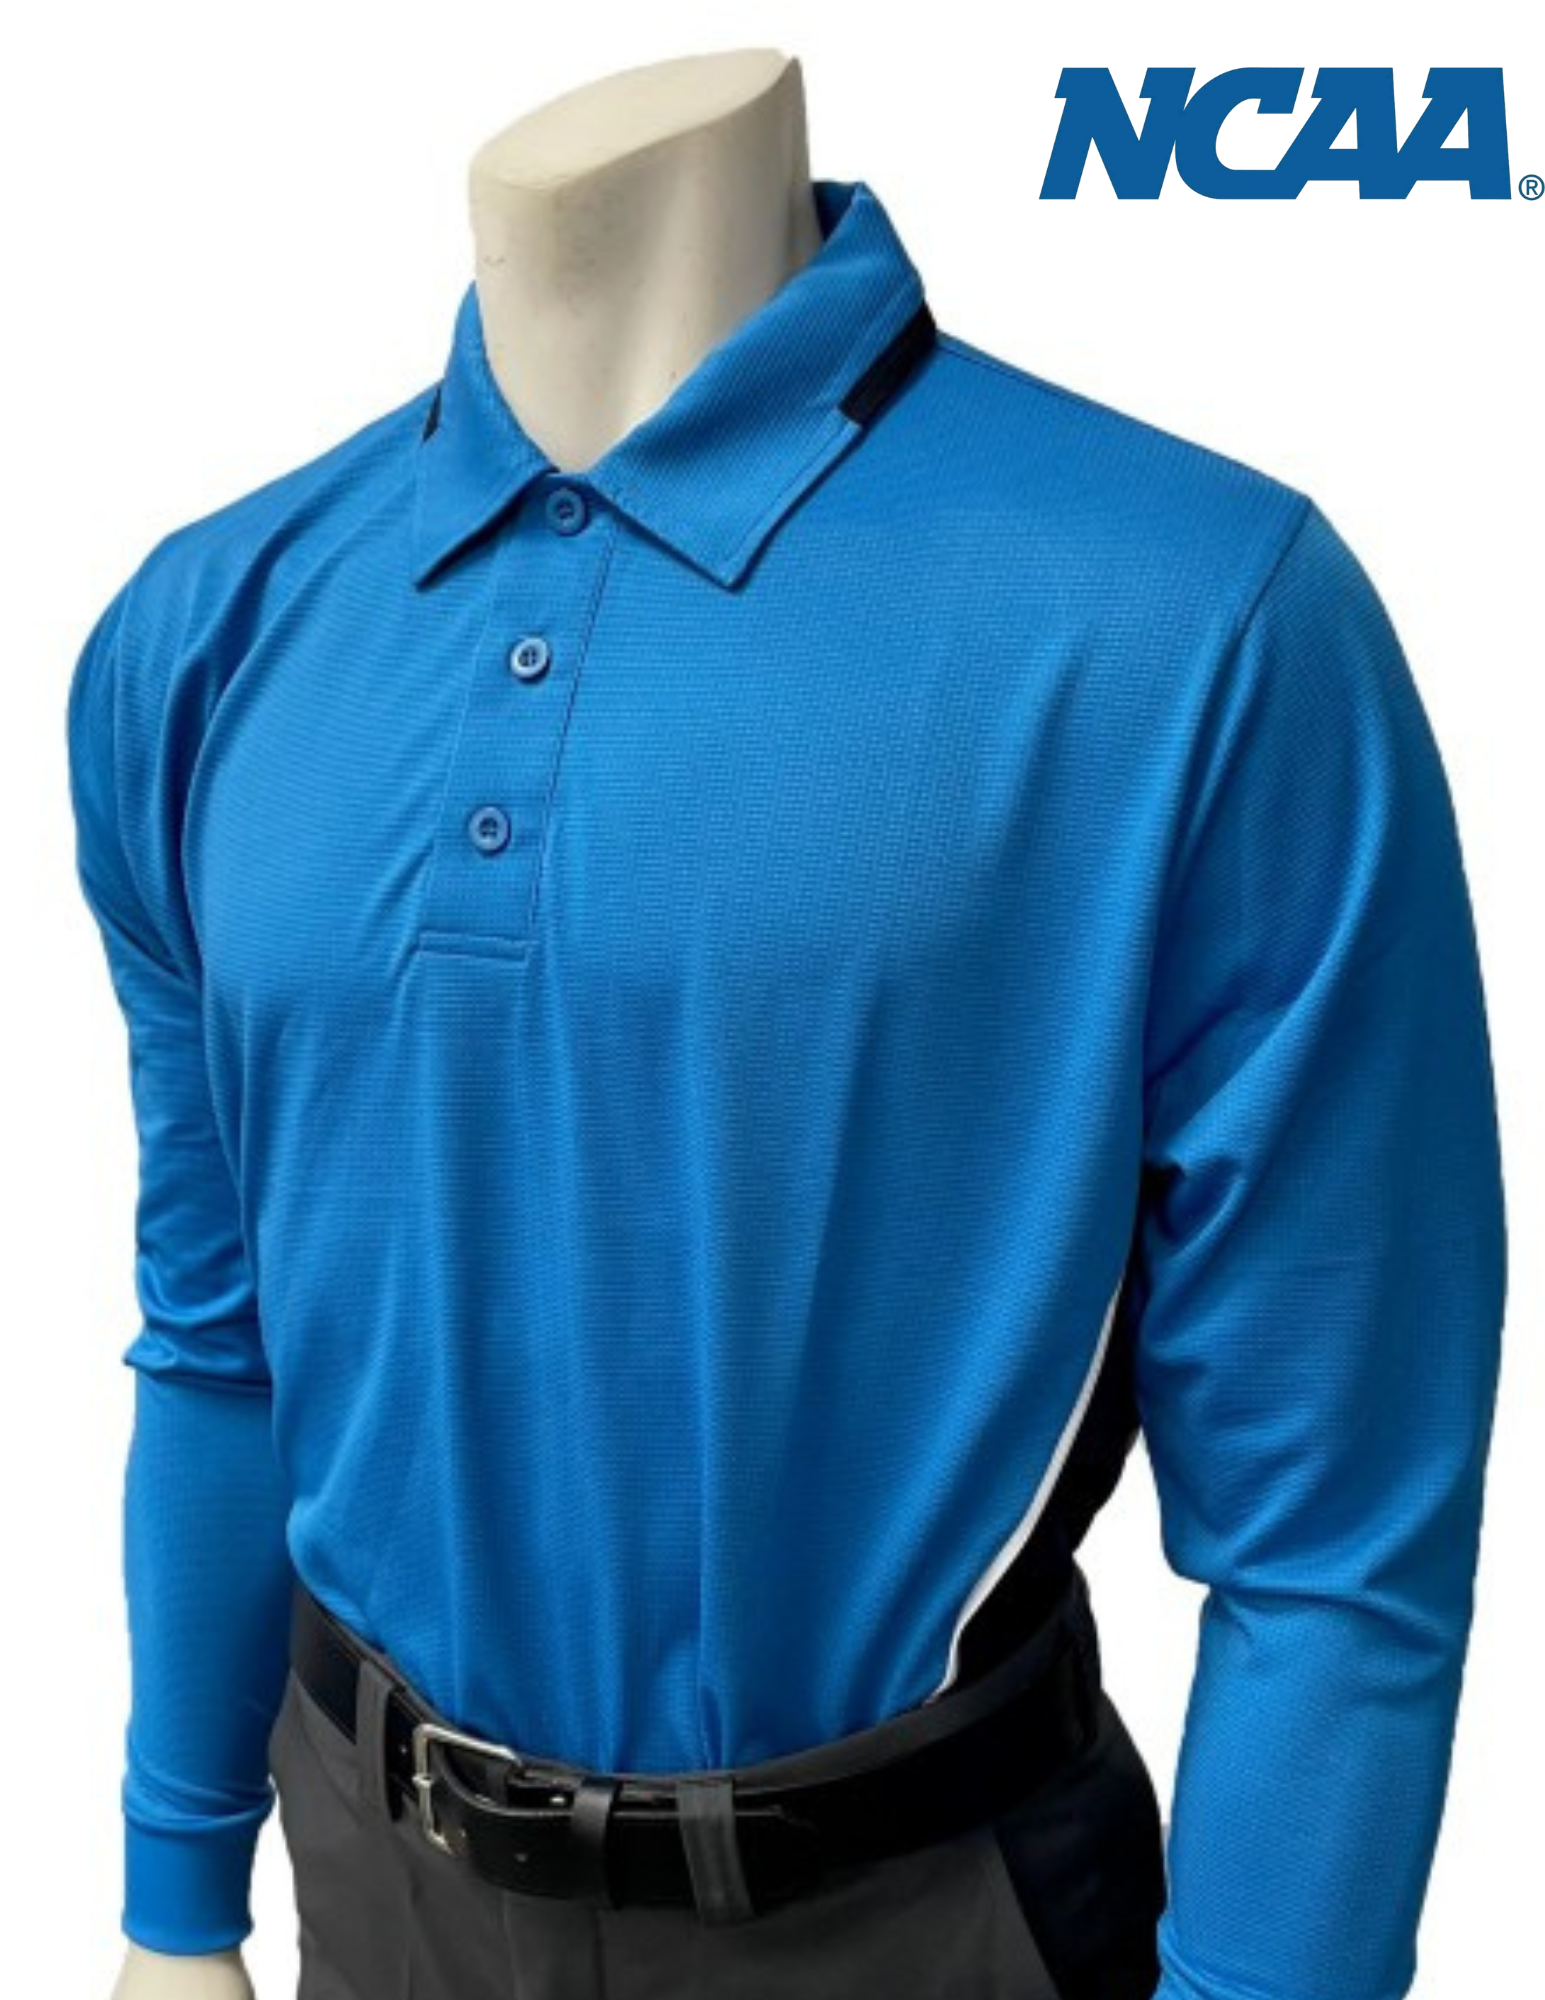 Men's BODY FLEX NCAA SOFTBALL Style Long Sleeve Umpire Shirts - Bright Blue